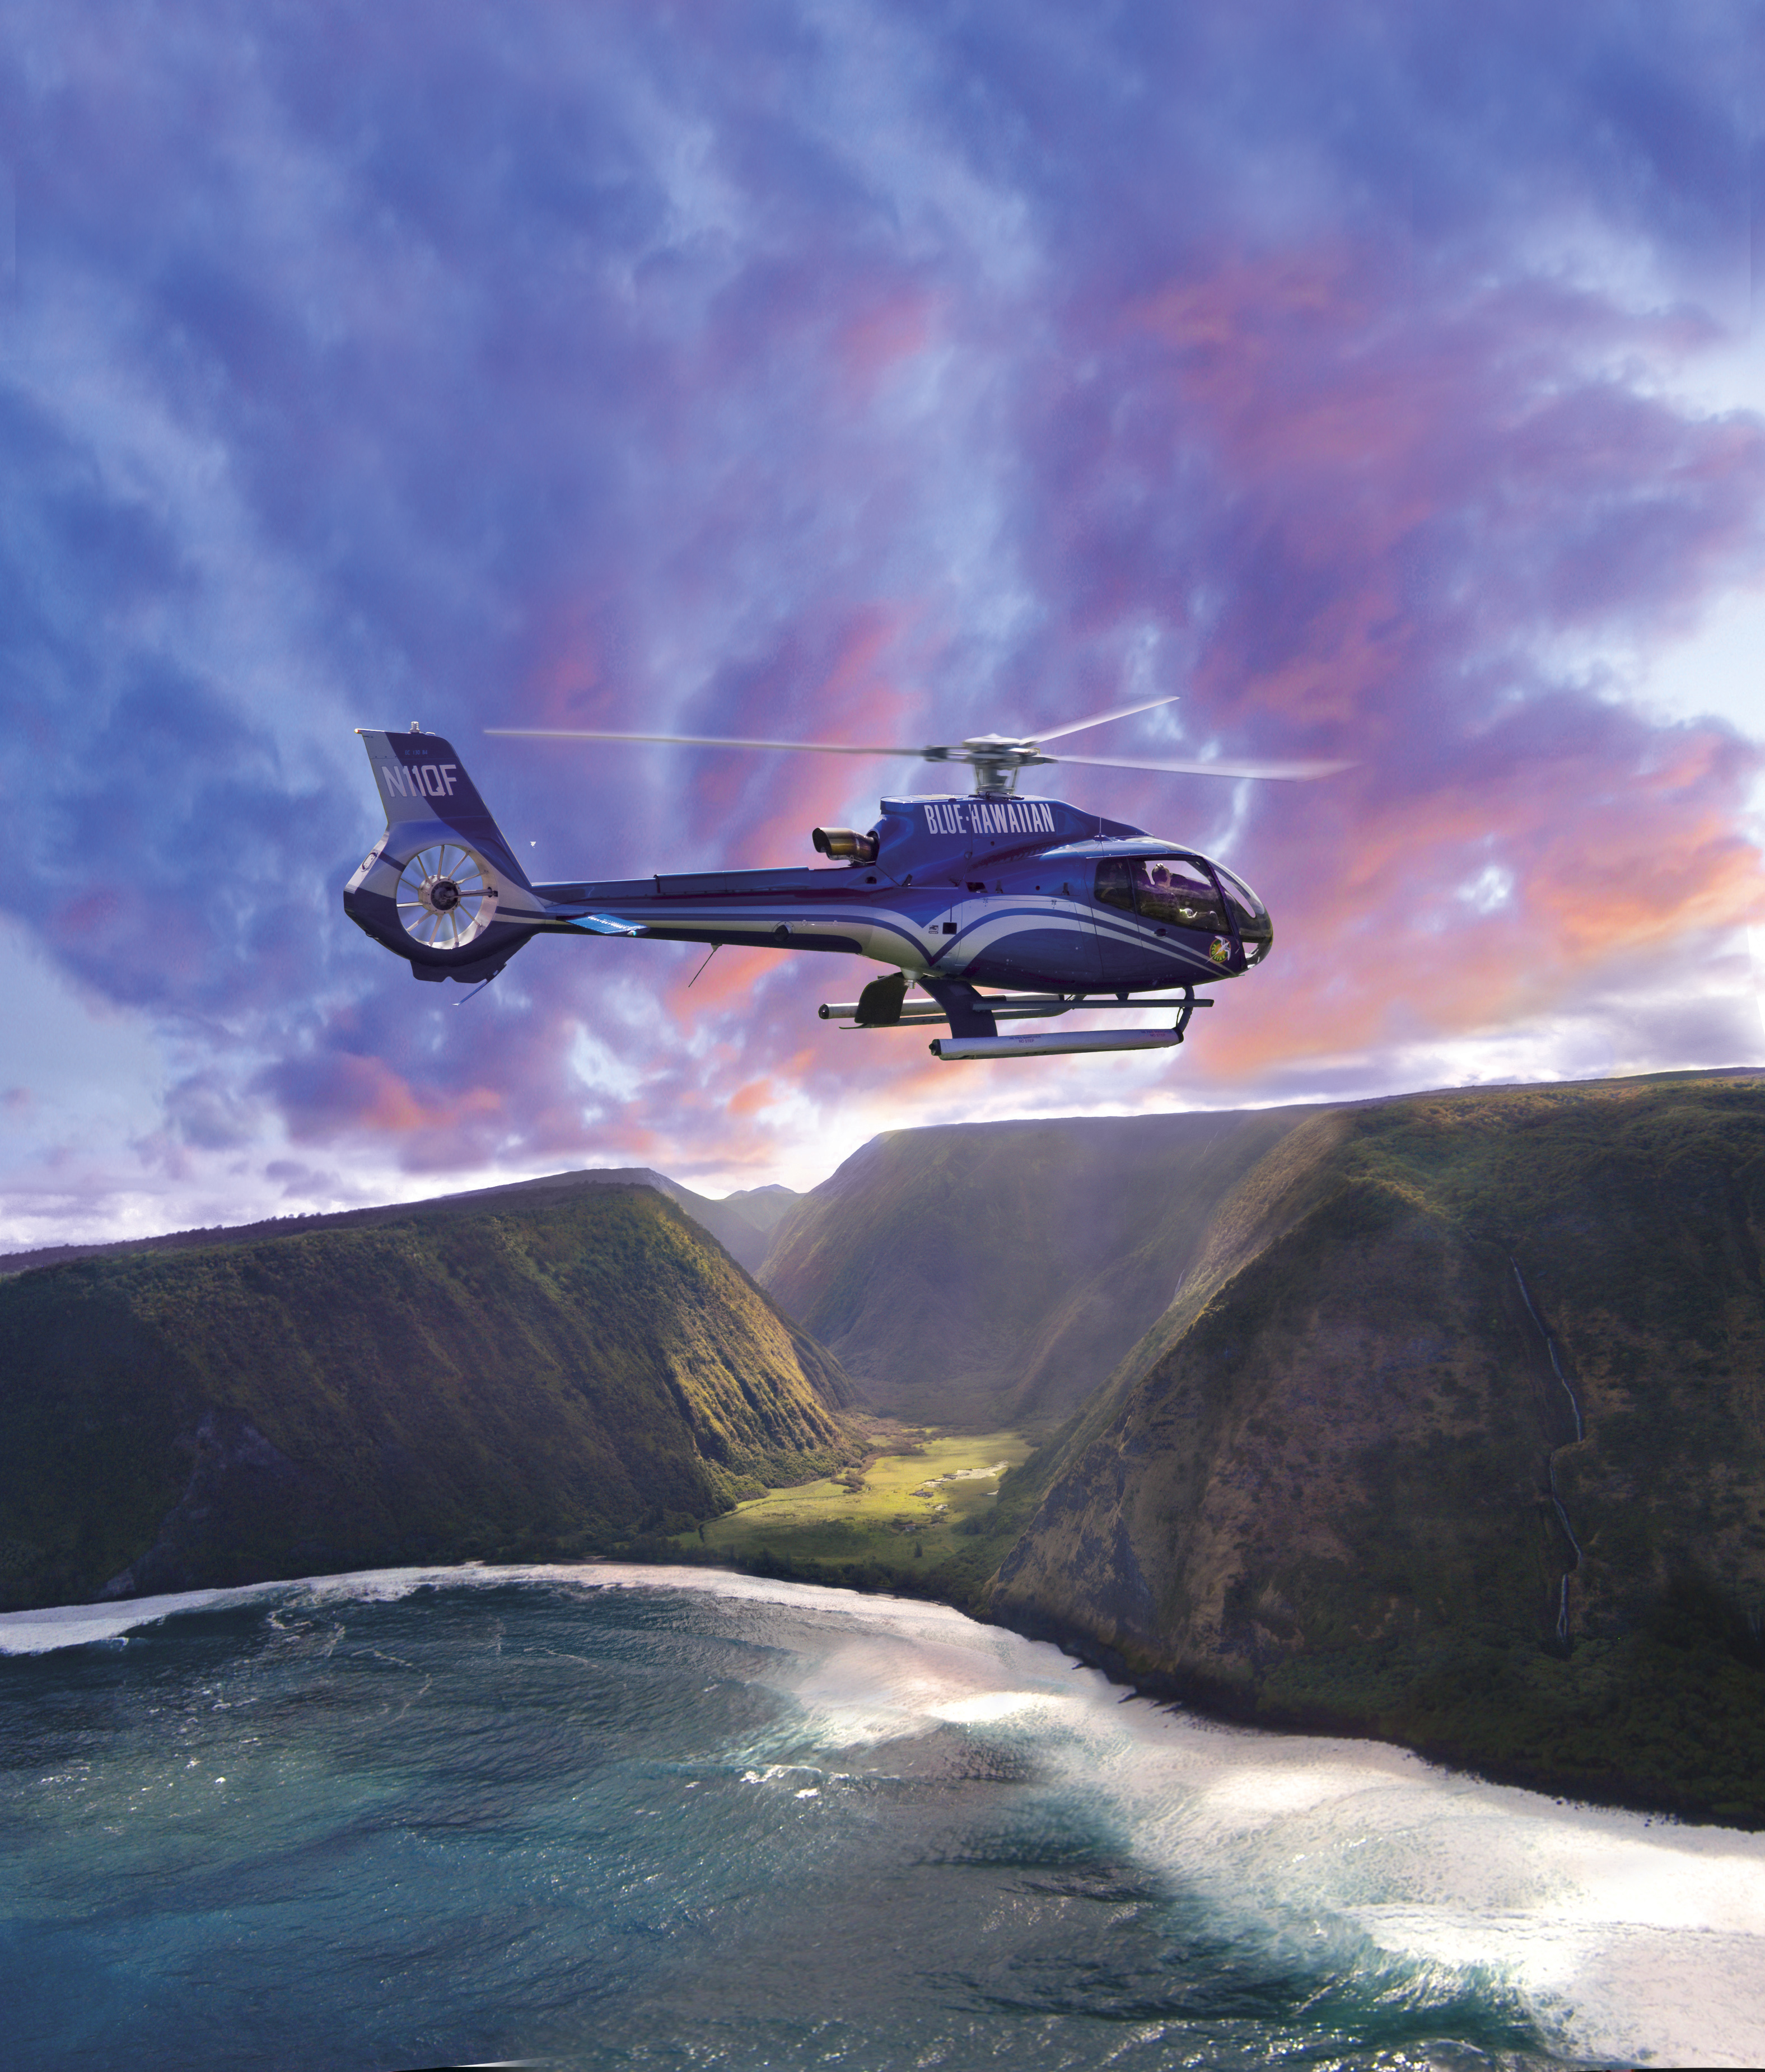 Product Kohala Coast Helicopter Adventure